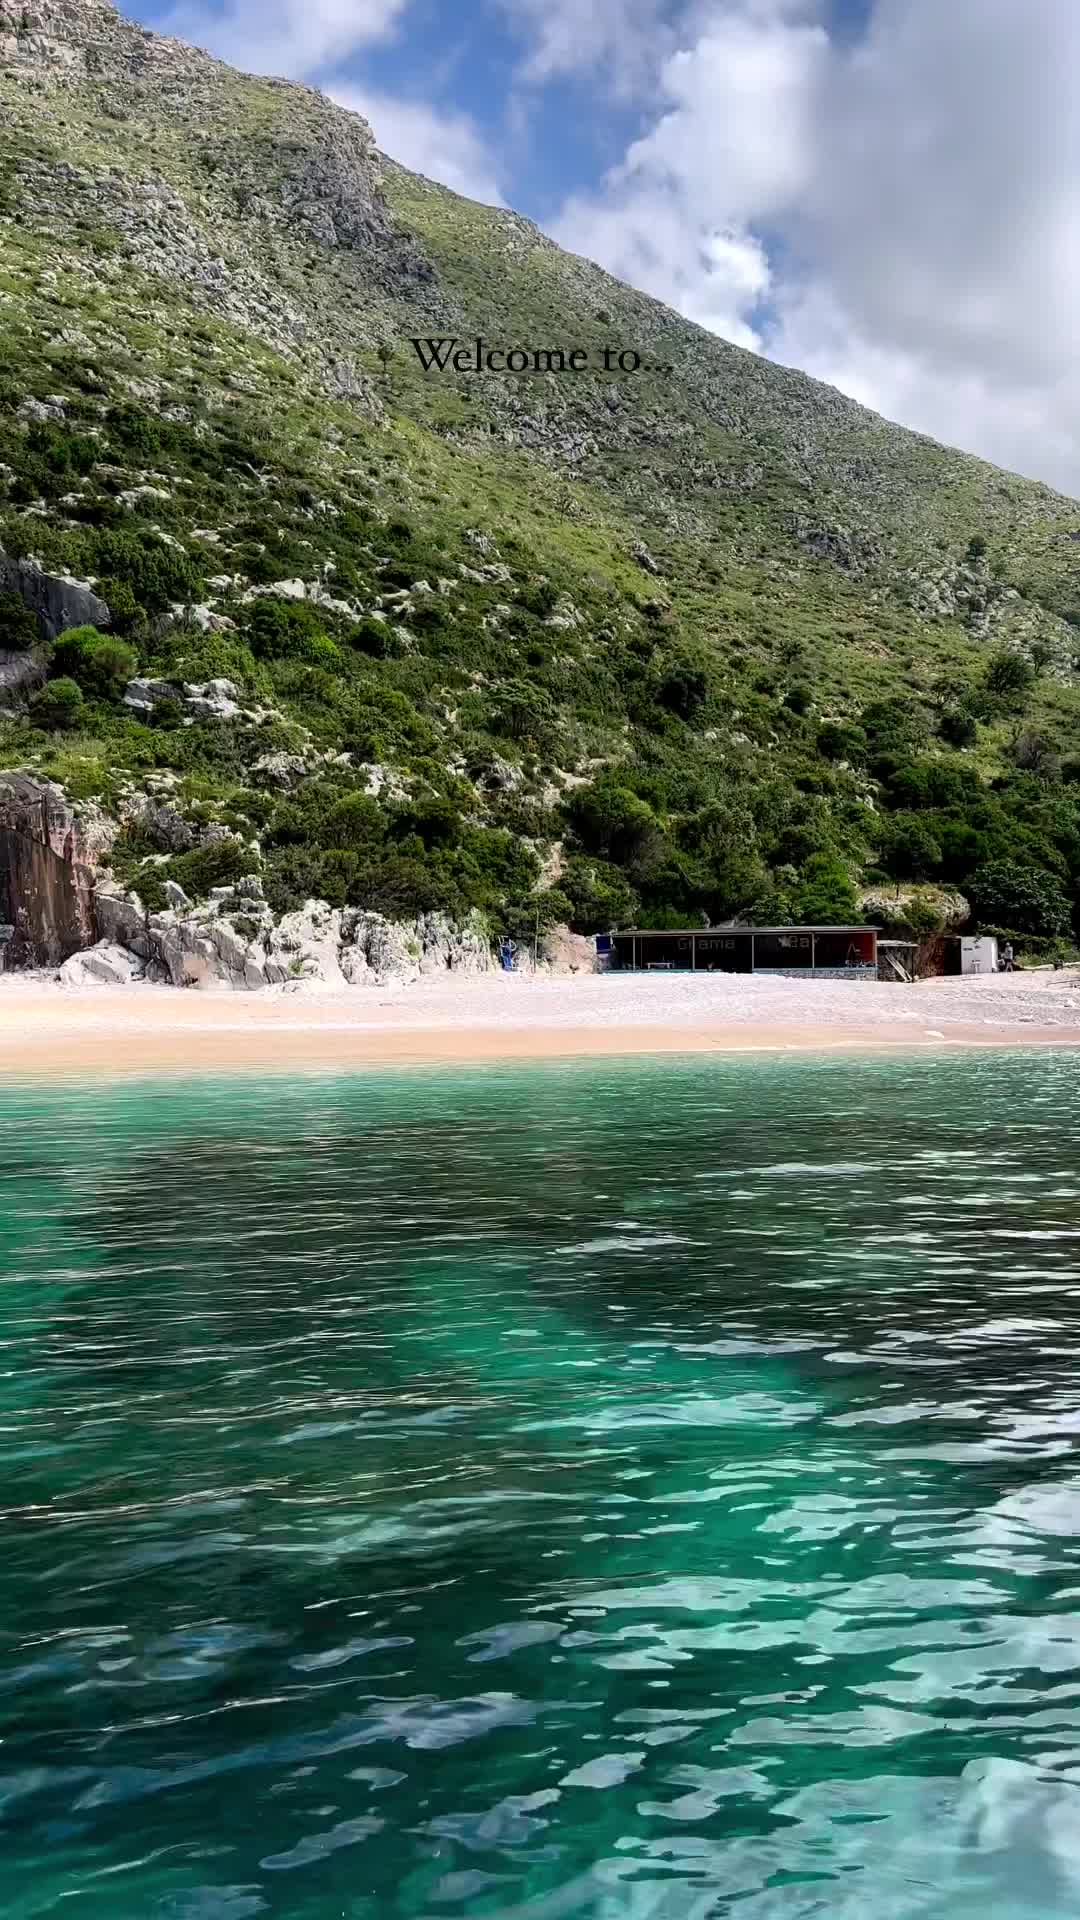 Grama Bay, Albania: A Tranquil Scenic Paradise